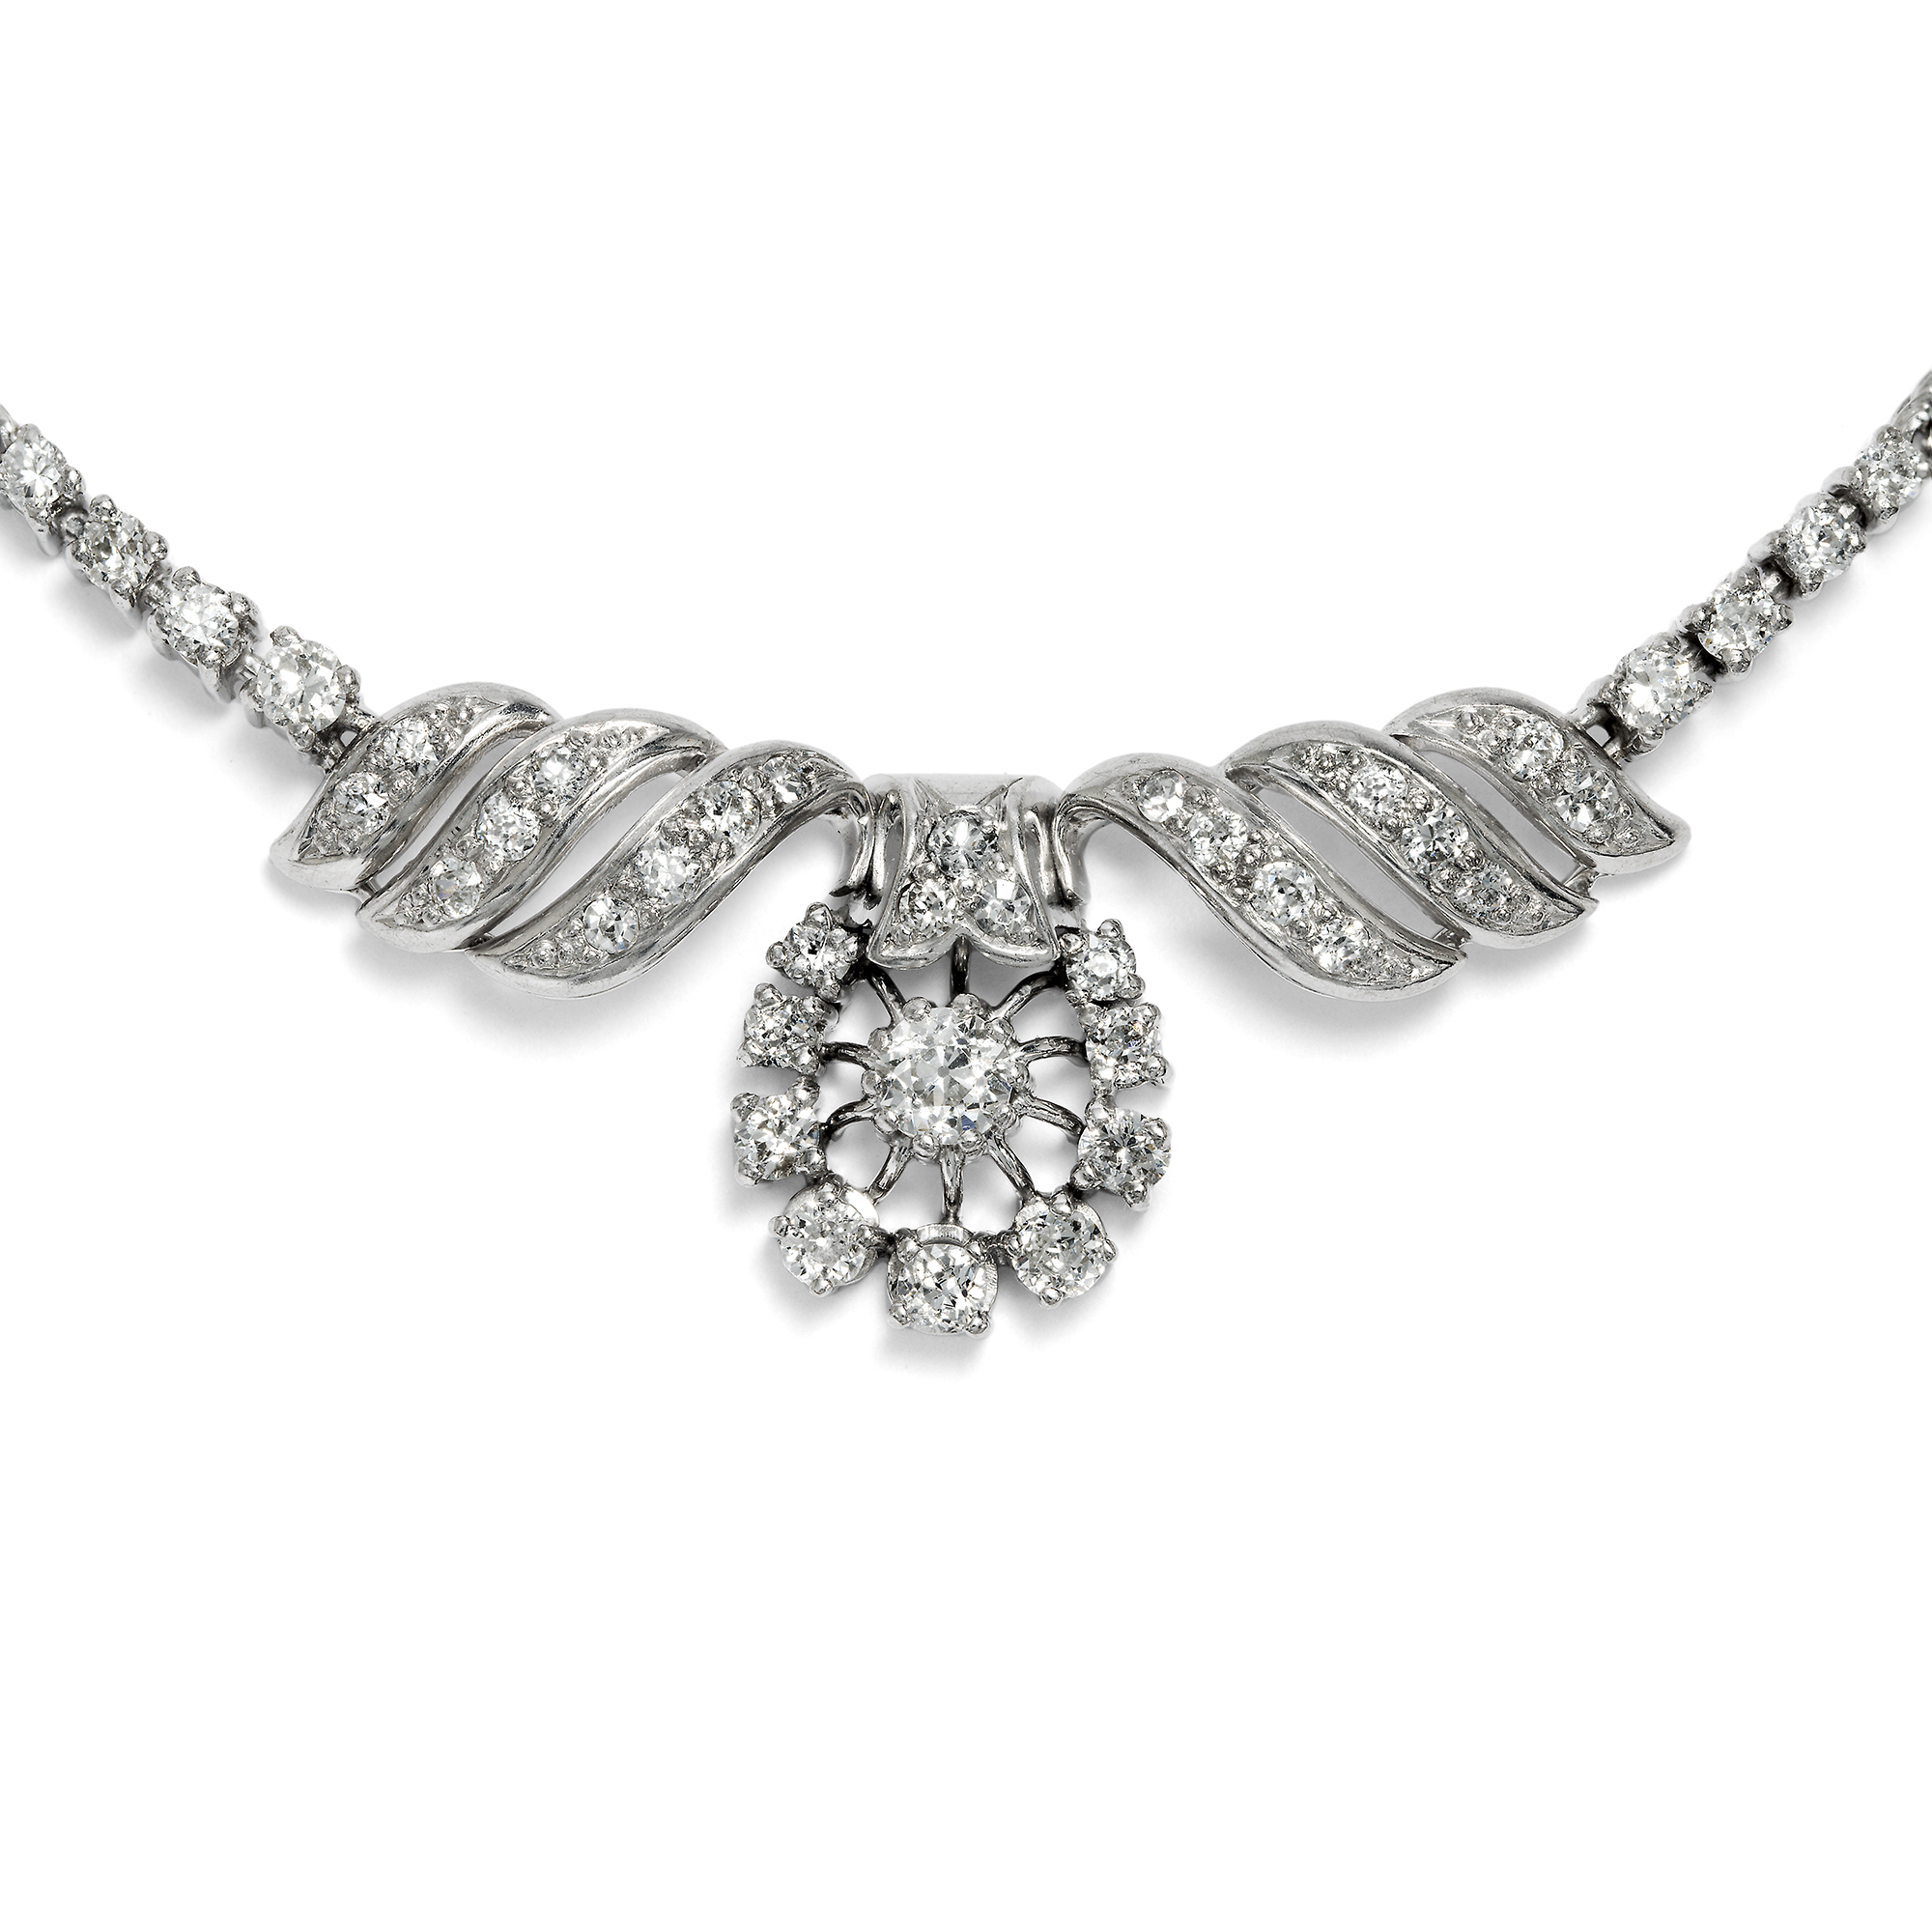 Glamorous Vintage Diamond Necklace in White Gold, Hanau c. 1955